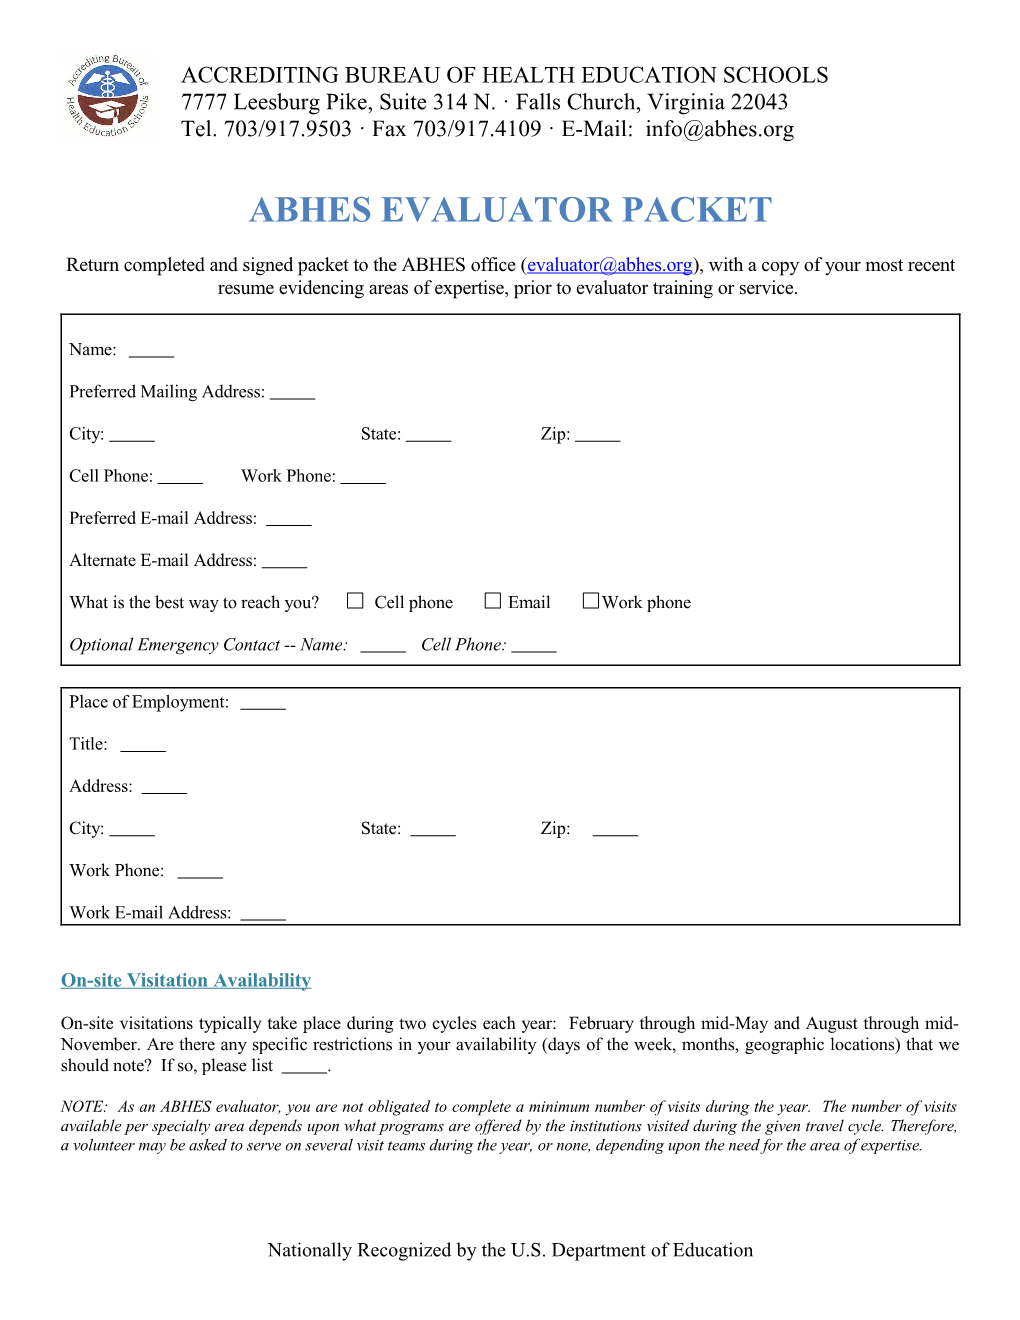 Abhes Evaluator Packet